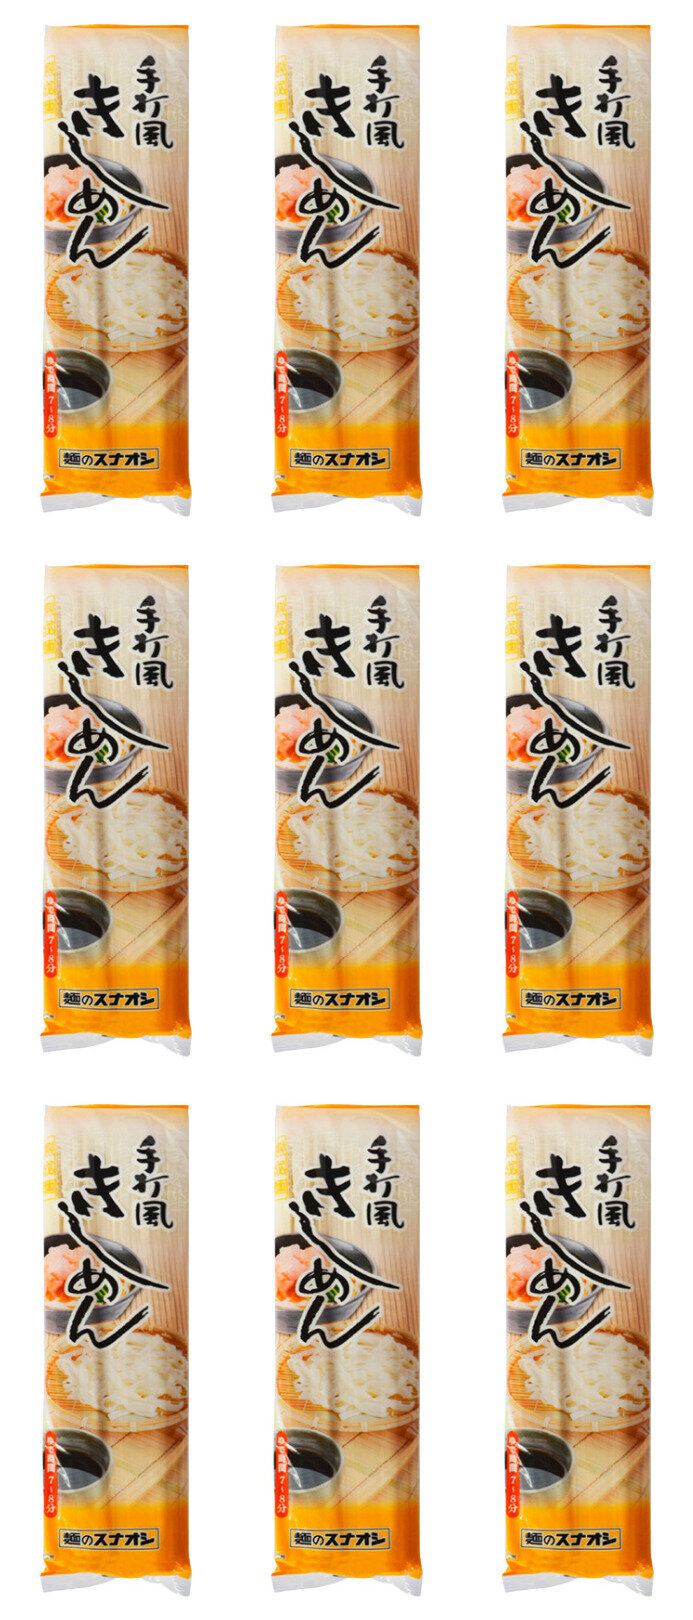 Sunaoshi Лапша пшеничная толстая Кисимен, 200 г, 9 уп